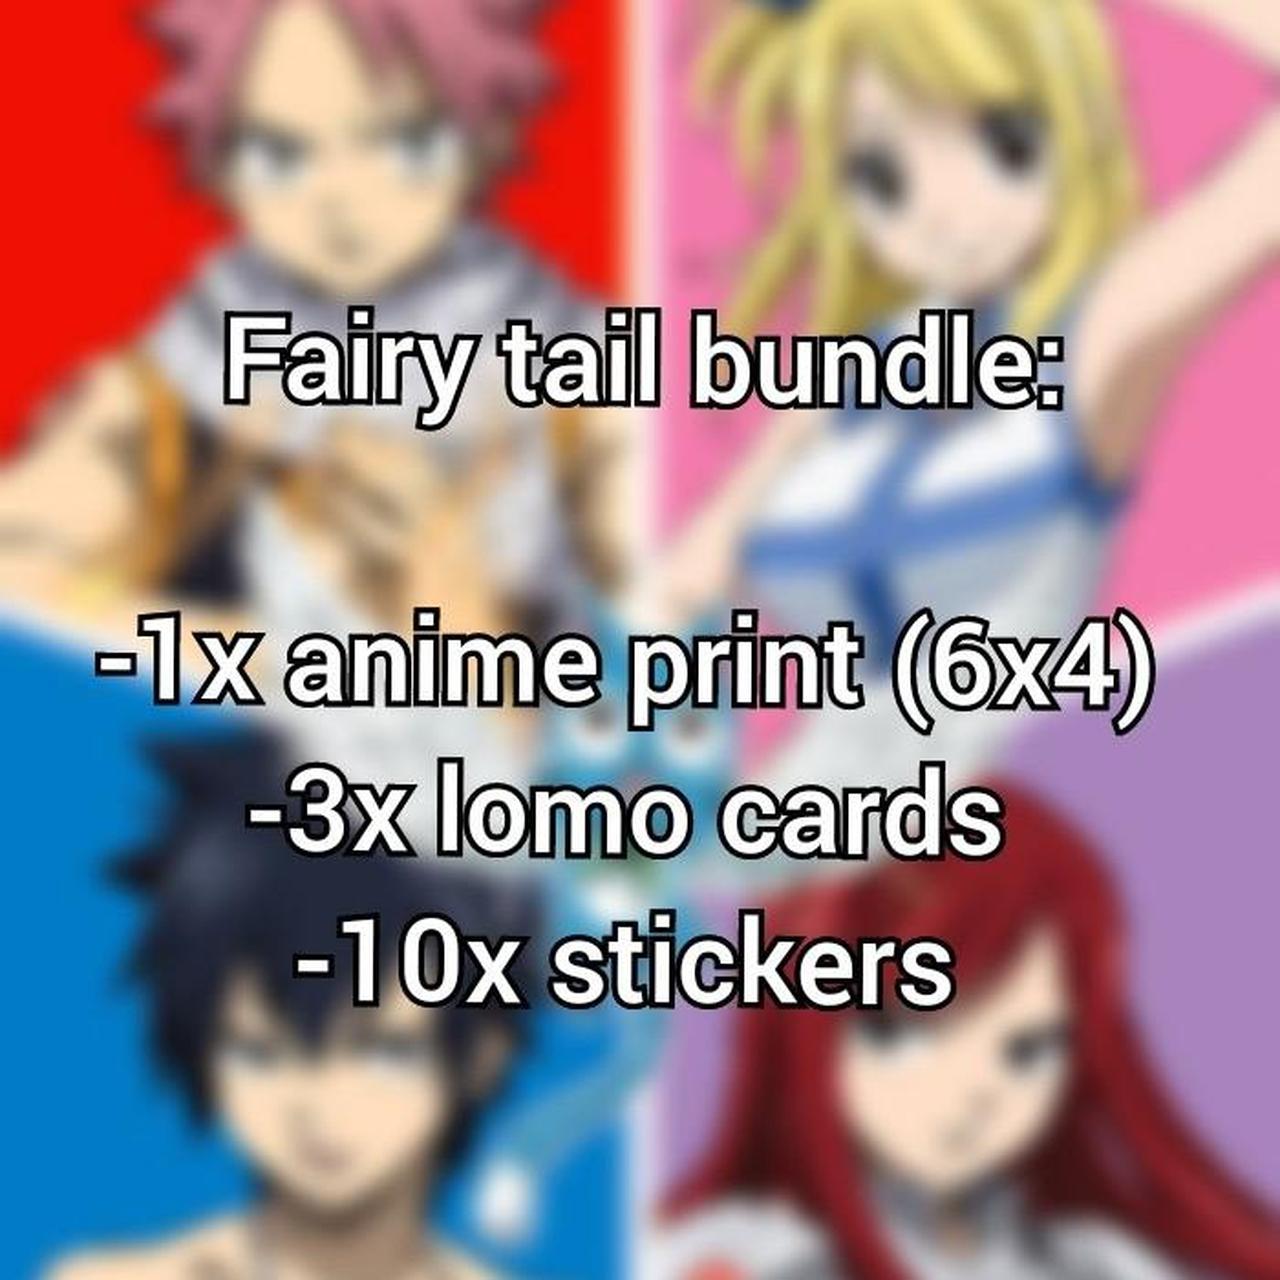 Product Image 1 - Fairy tail anime bundle

1x print